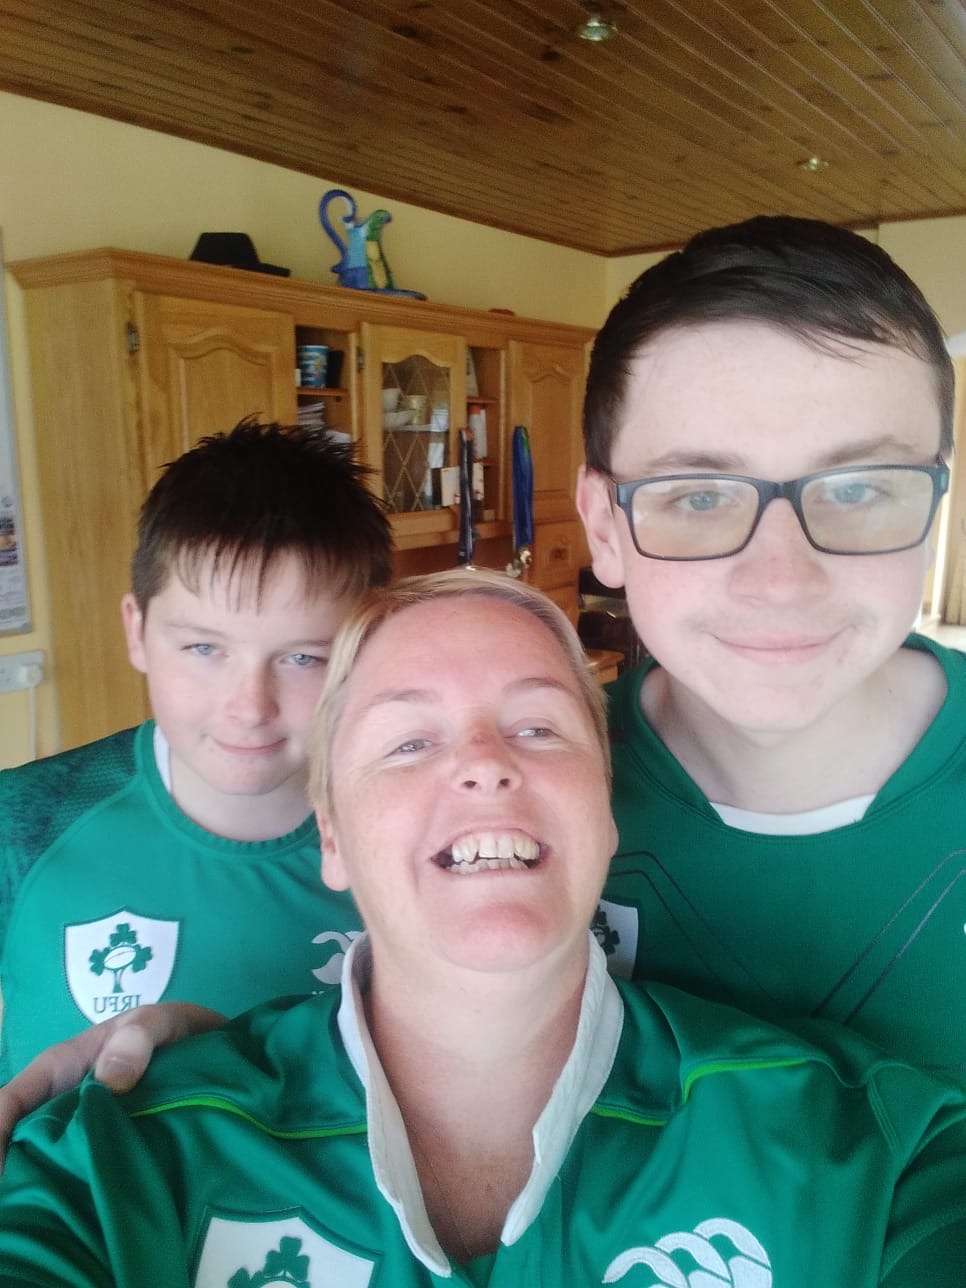 A selfie of Treacy and her 2 sons wearing irish jerseys